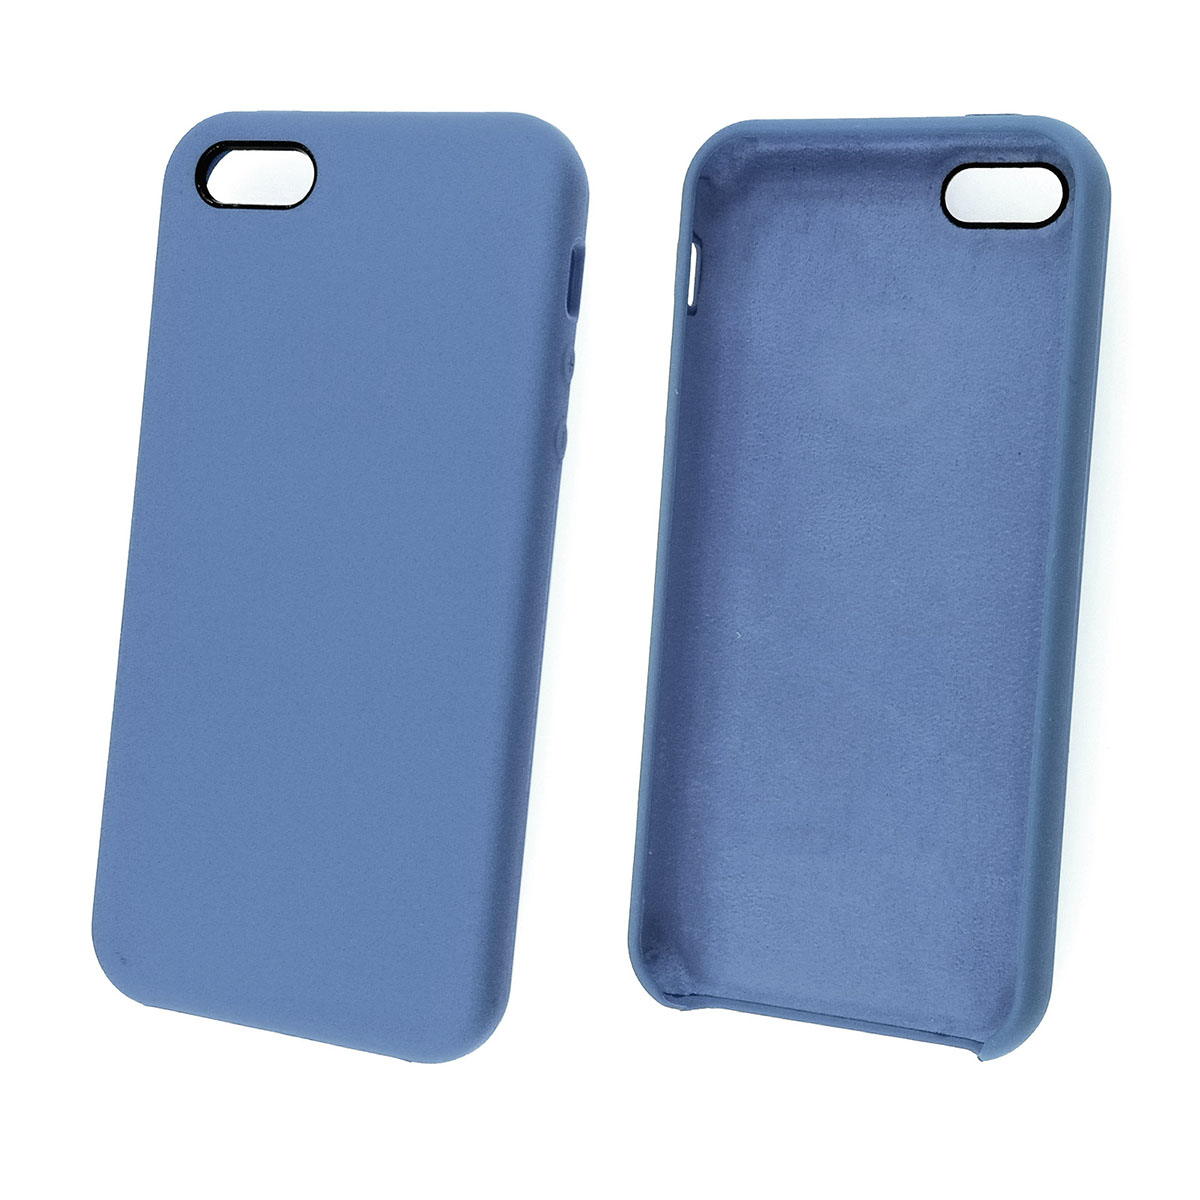 Чехол накладка Silicon Case для APPLE iPhone 5, 5S, SE, силикон, бархат, цвет синий.